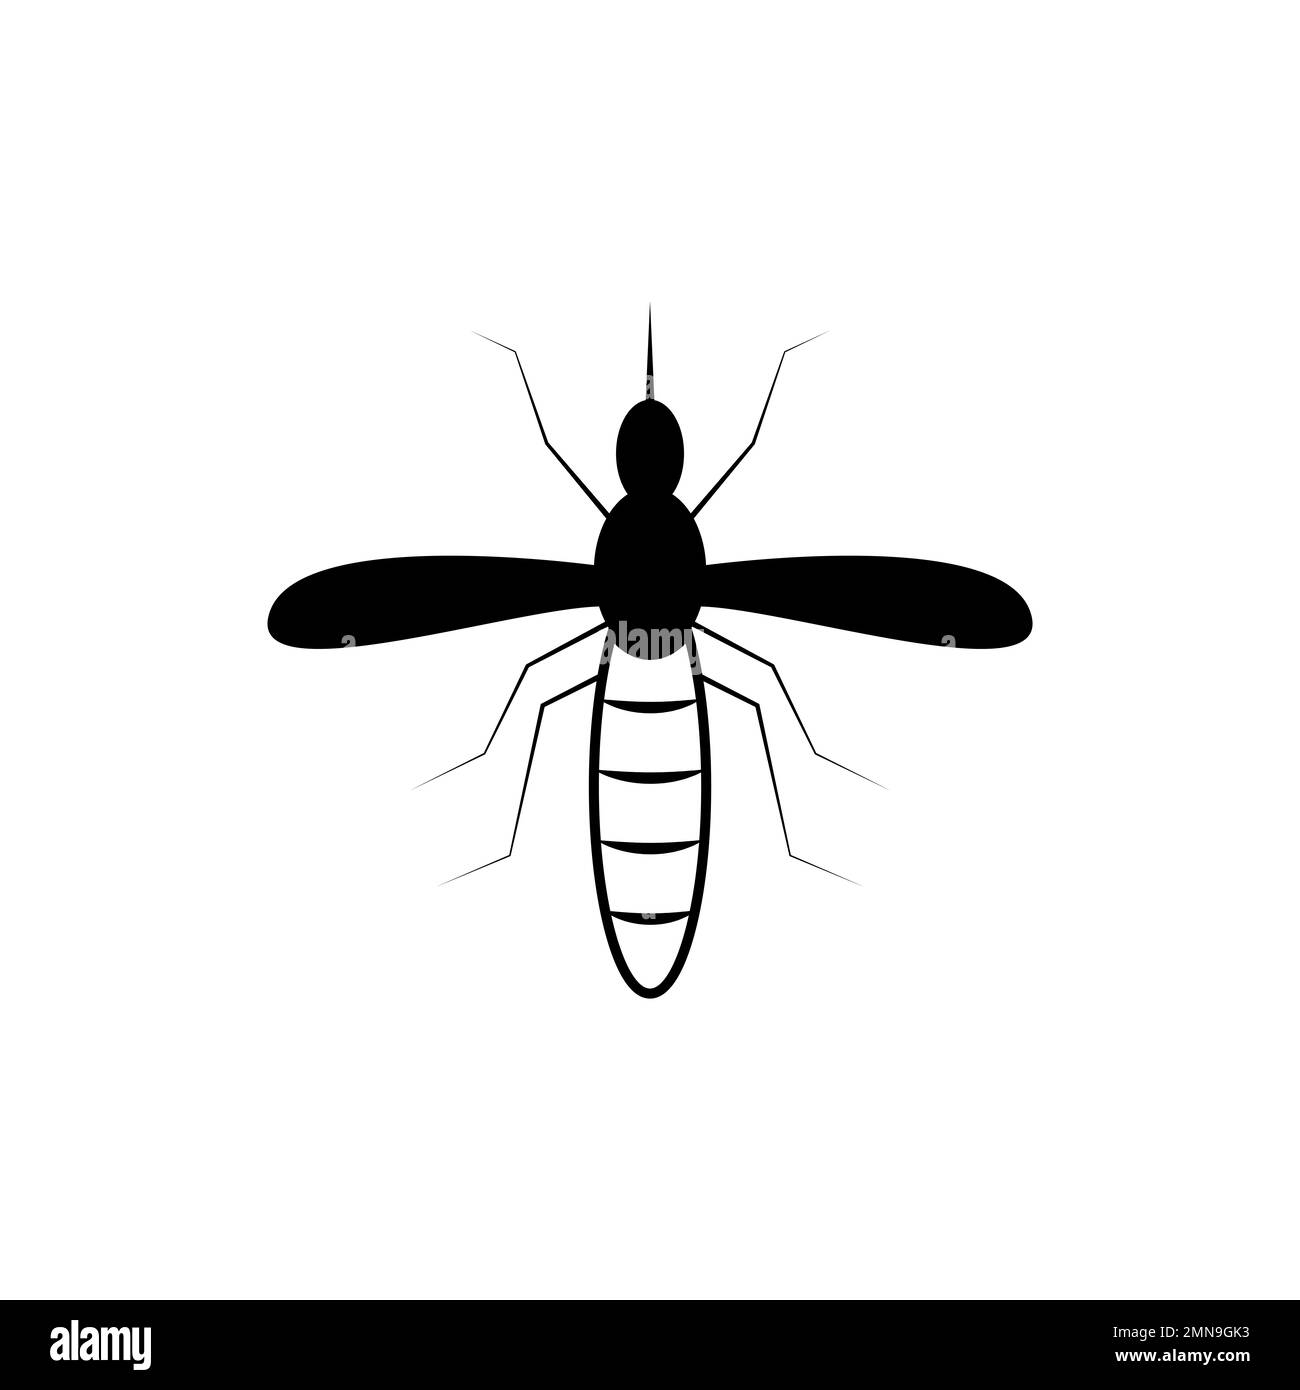 Mosquito logo Black and White Stock Photos & Images - Alamy